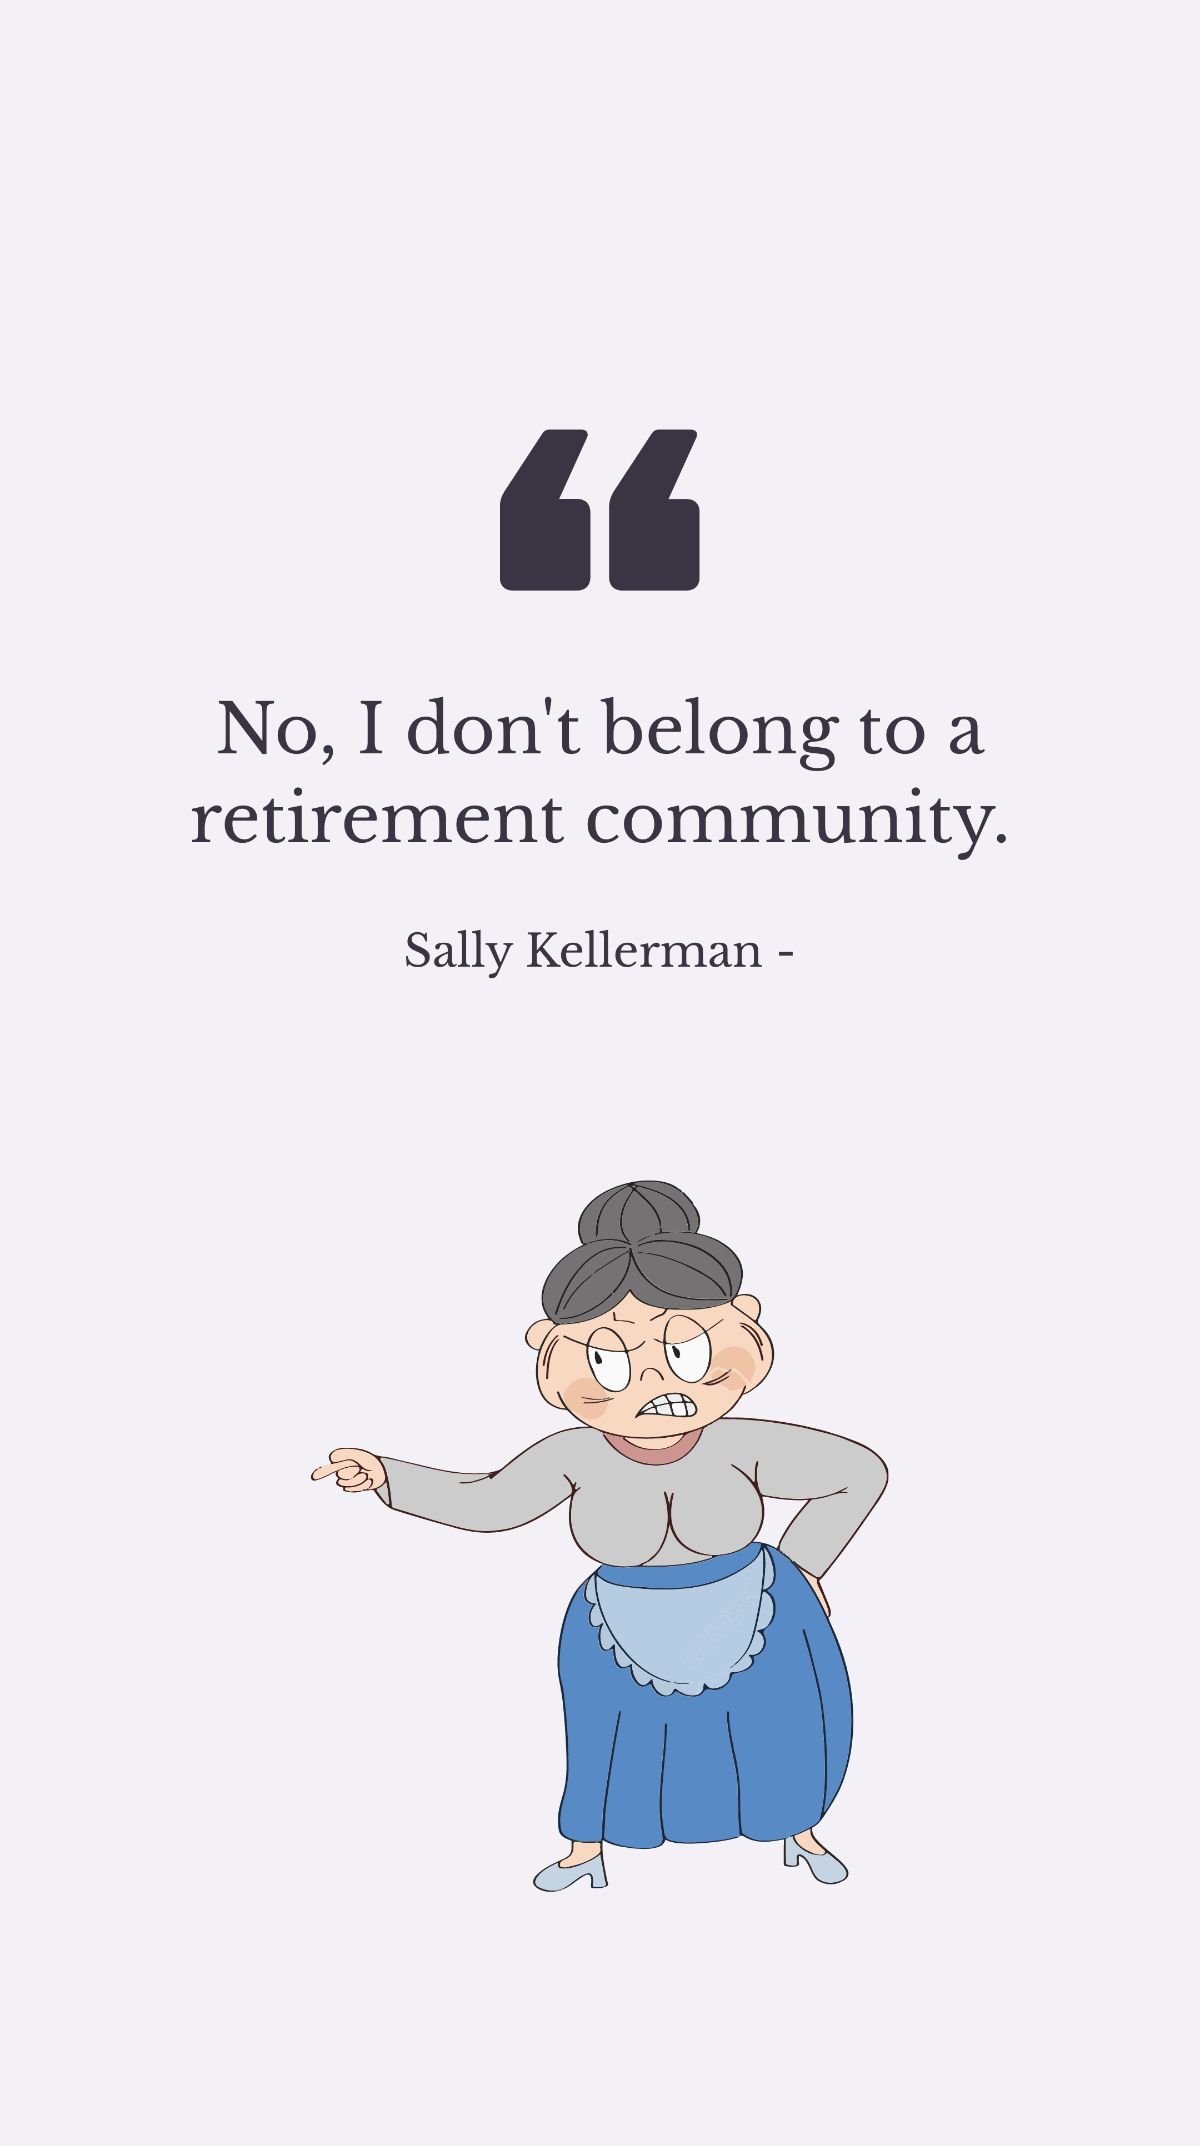 Sally Kellerman - No, I don't belong to a retirement community.